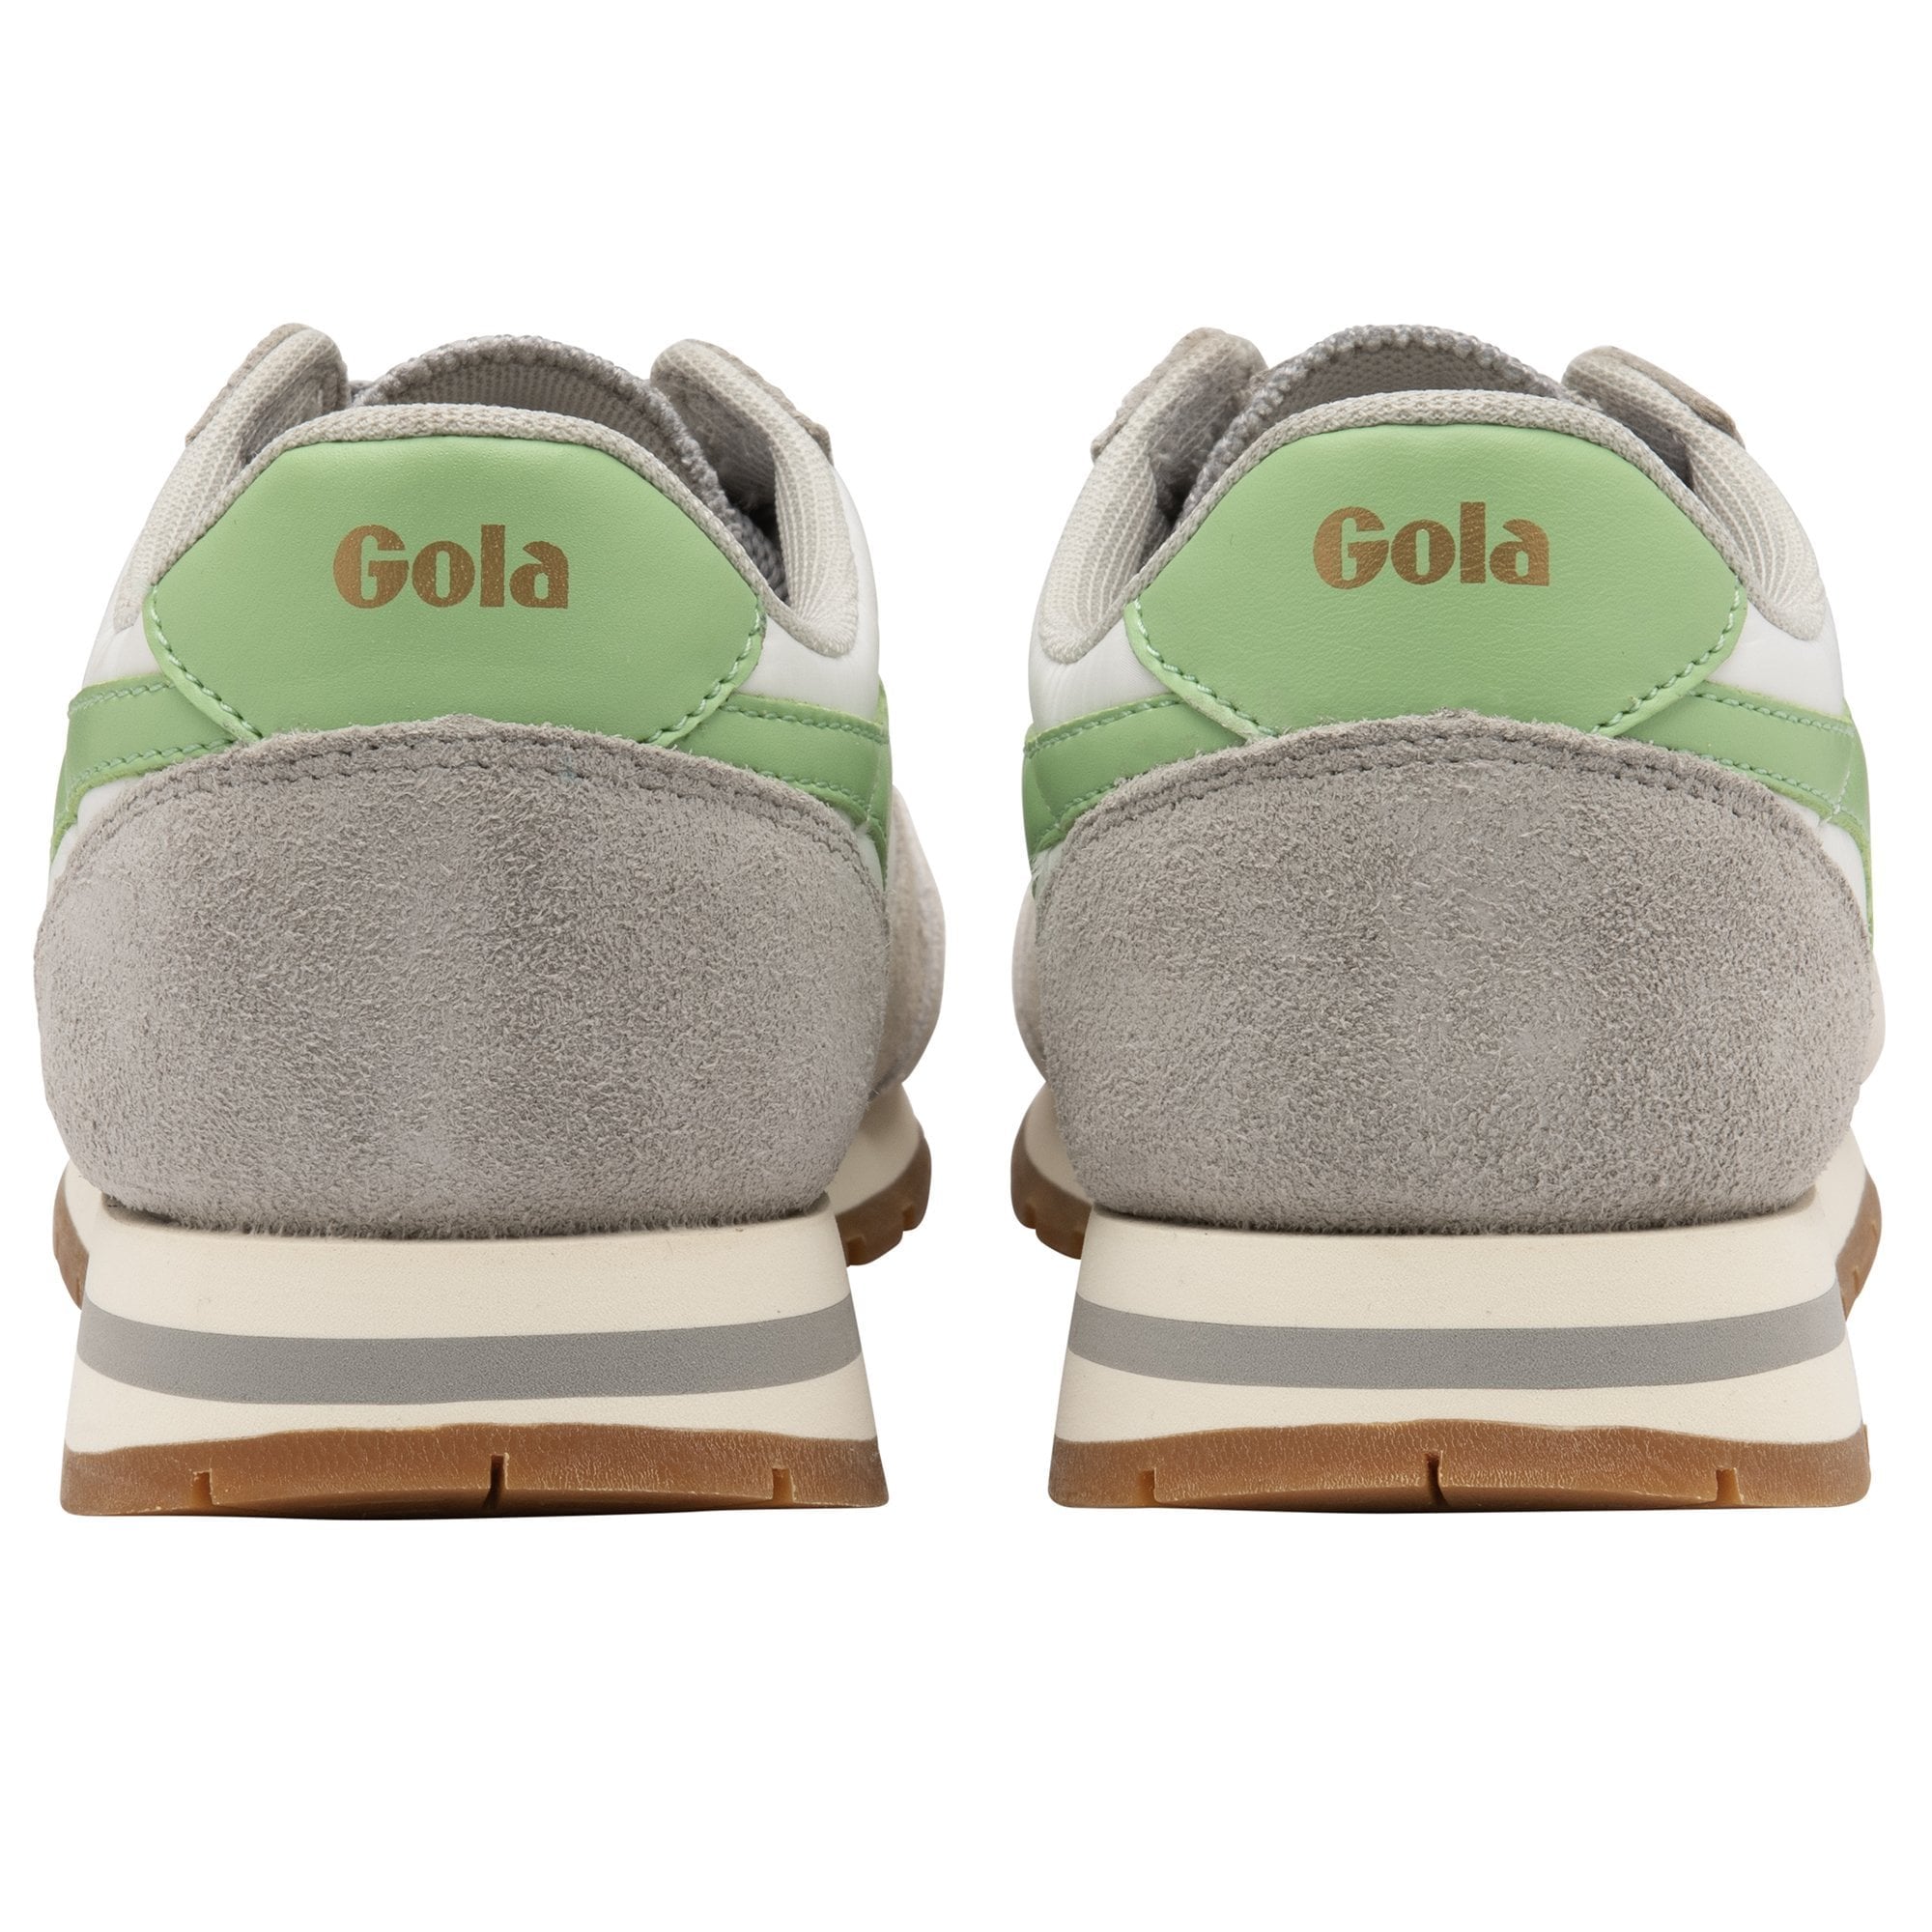 Gola Daytona Chute Grey Patina Green Sneakers